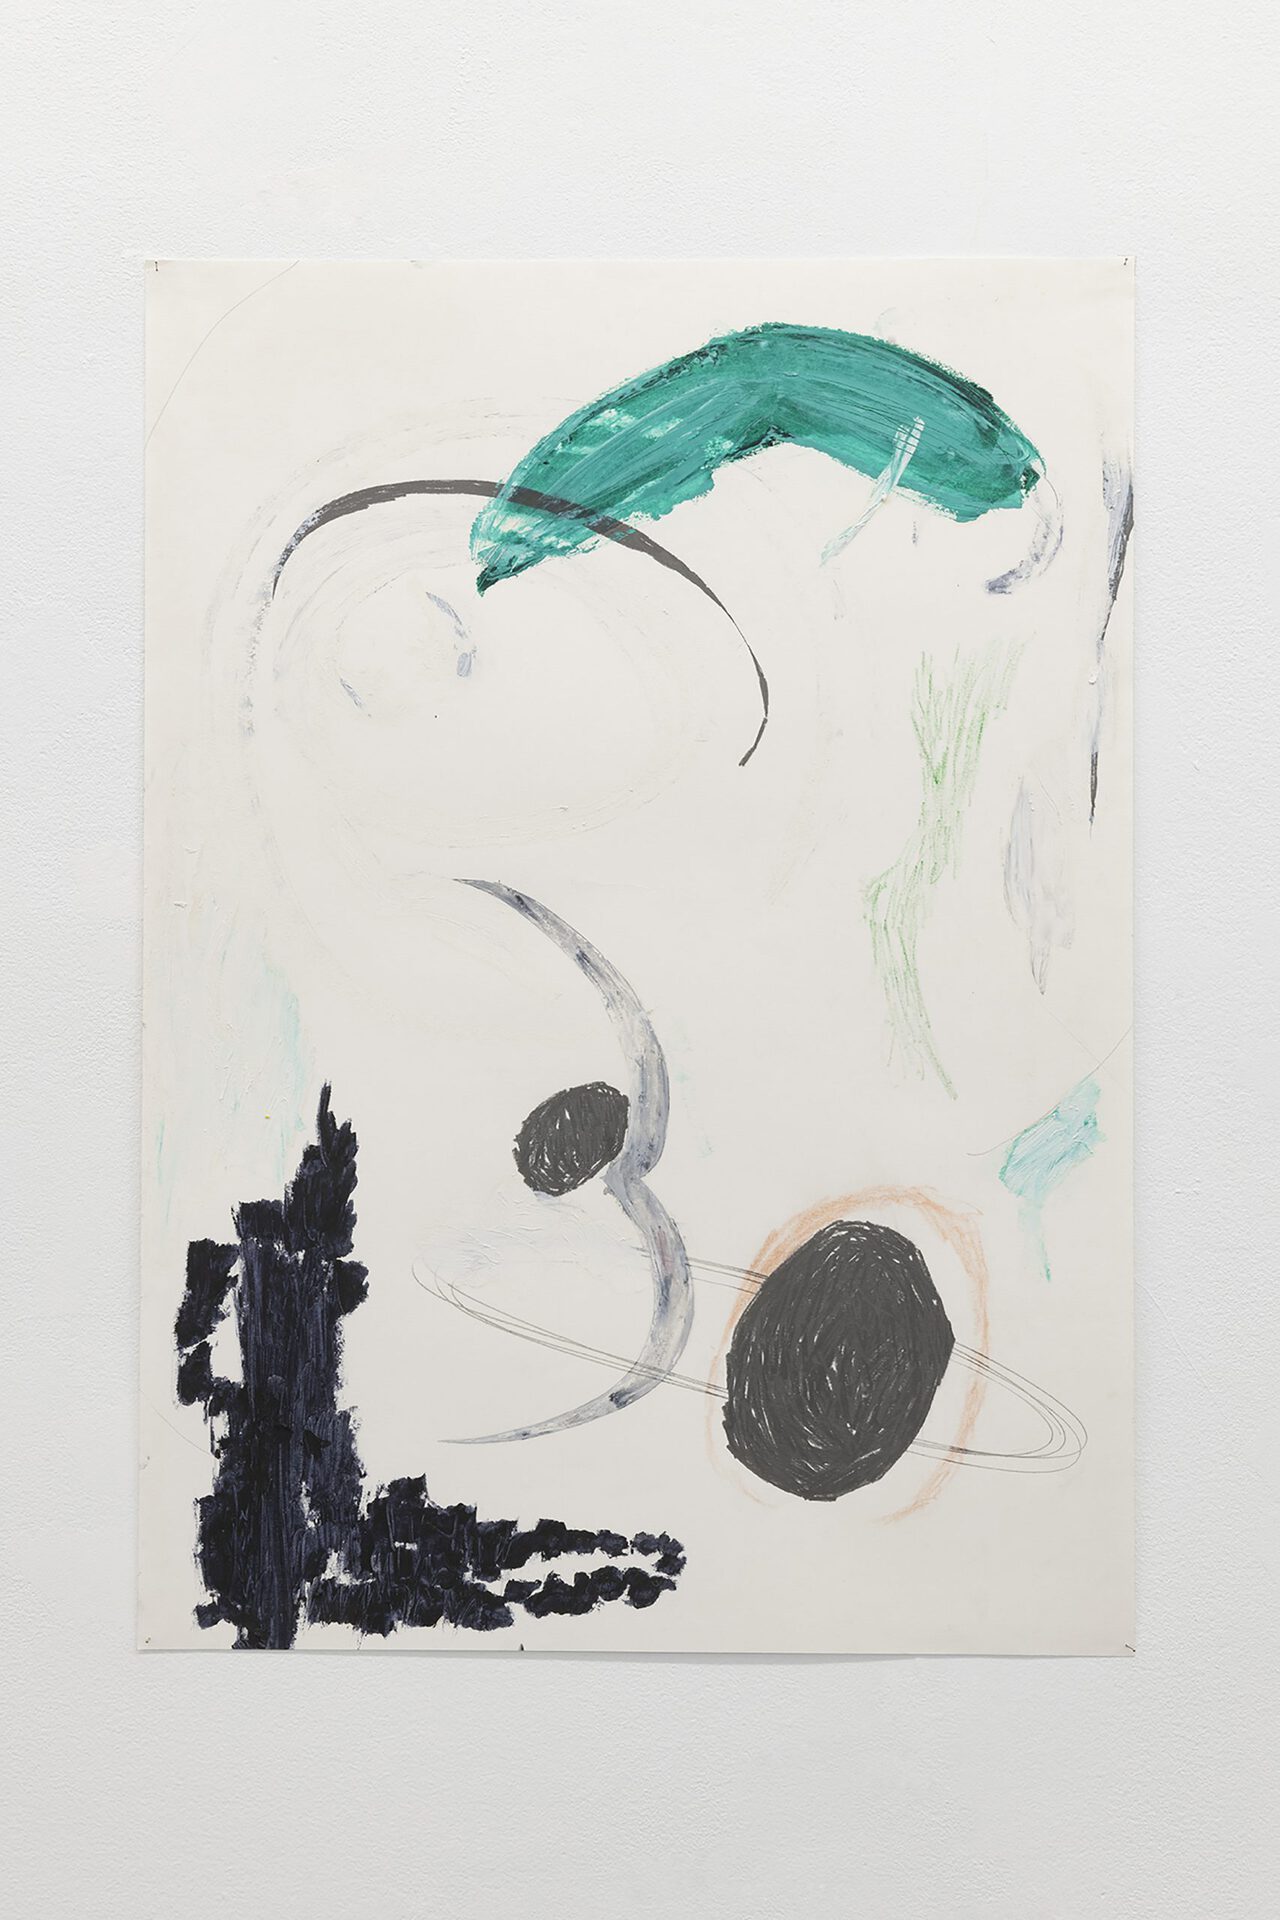 David Benarroch, uu21, 2021, Oil stick and graphite on paper, 70 x 50 cm, (Photo: Roberto Ruiz)